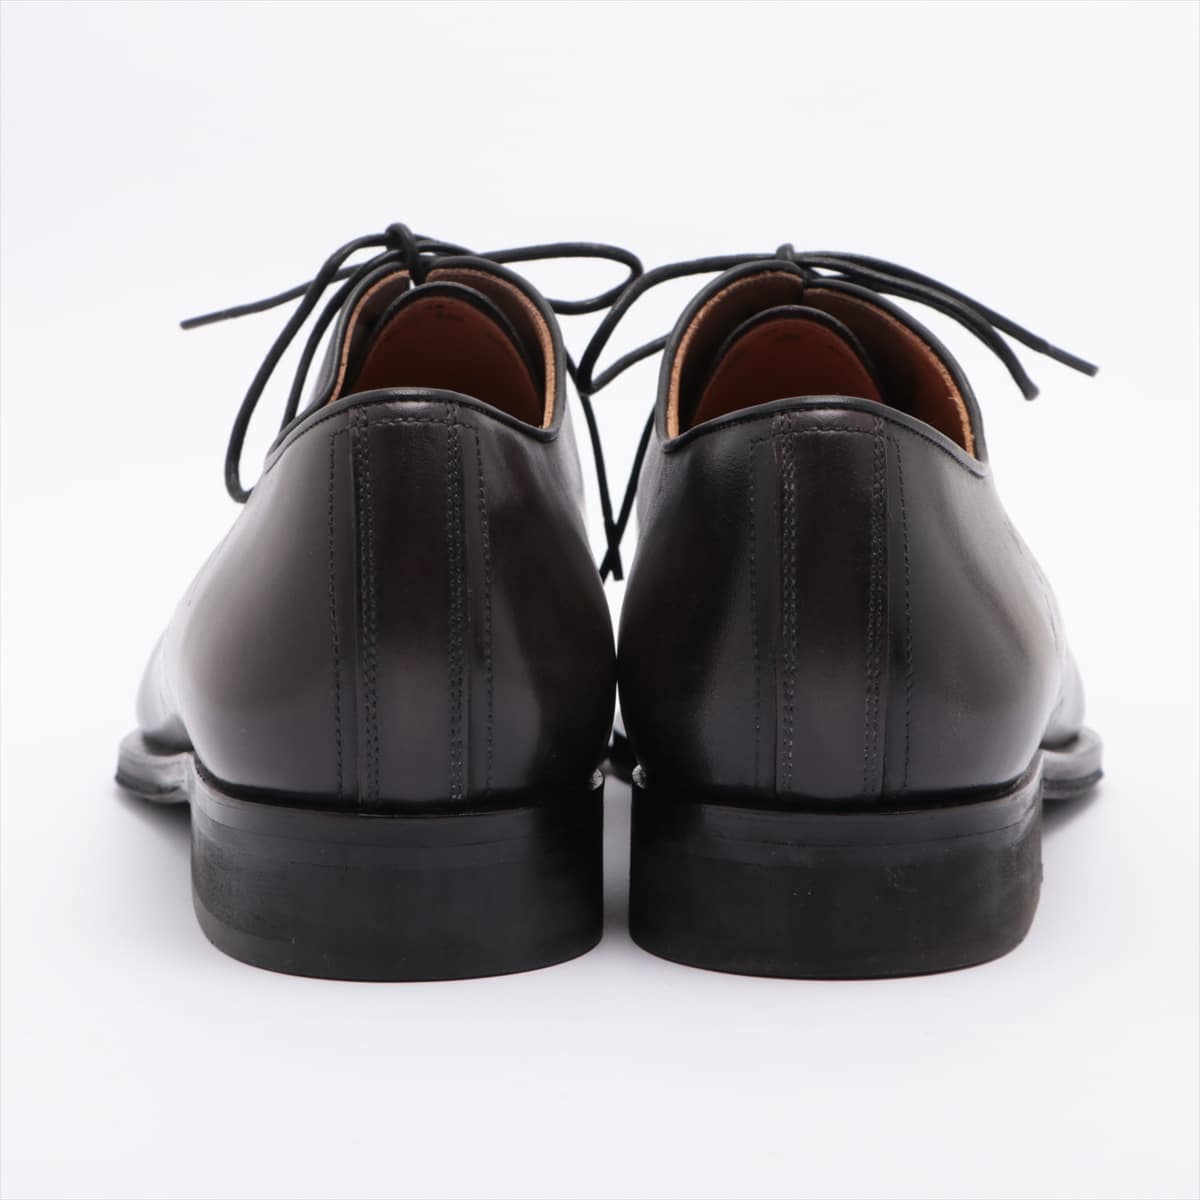 Berluti Calligraphy Leather Shoes 10 Men's Black Hole cut